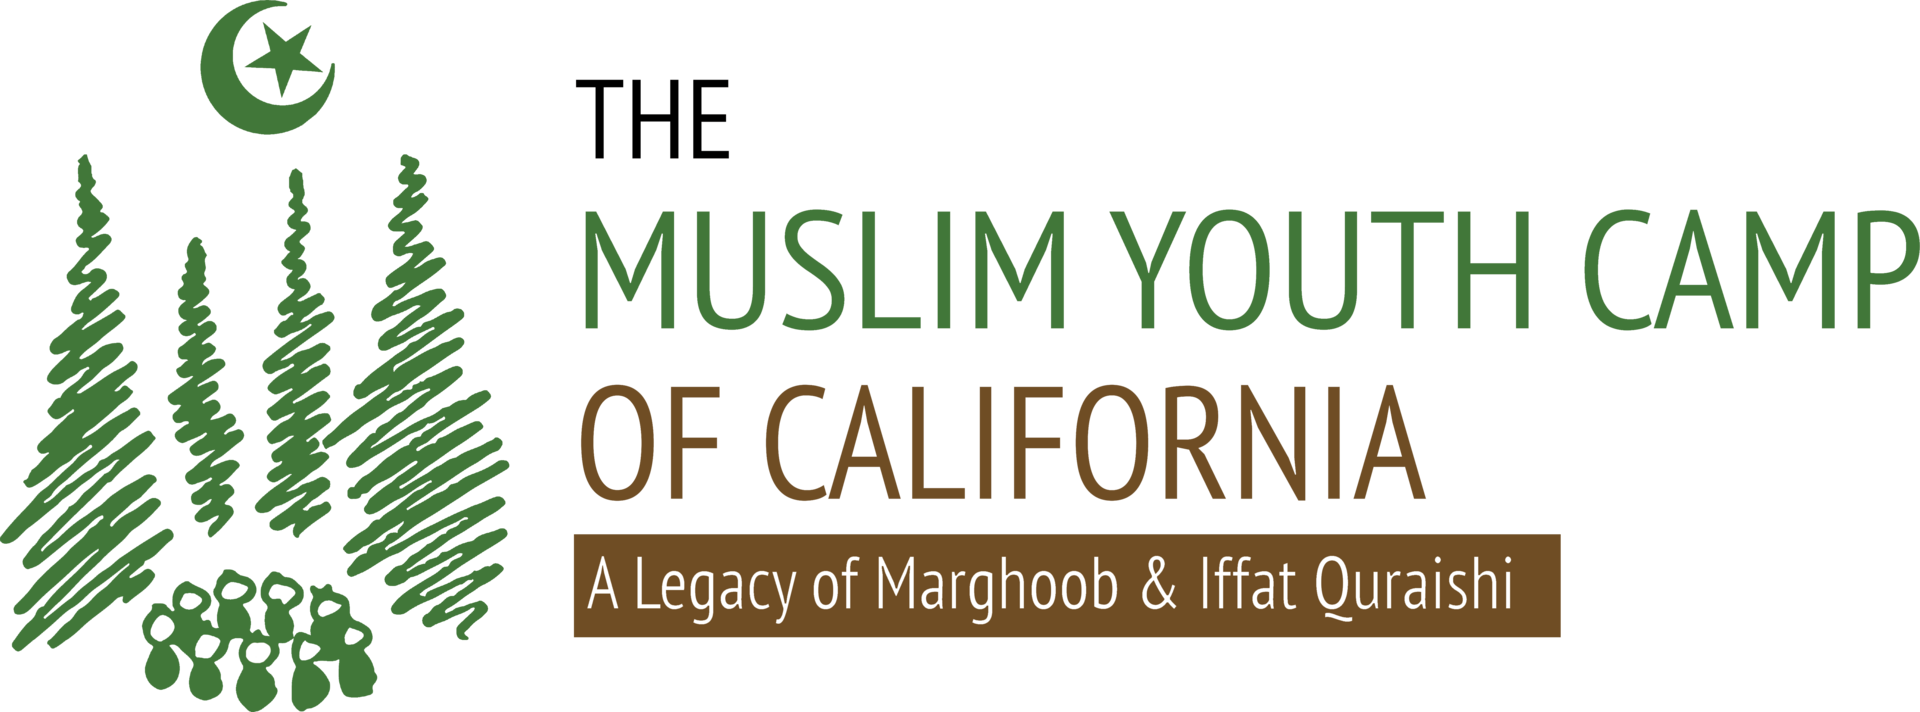 (c) Muslimyouthcamp.org